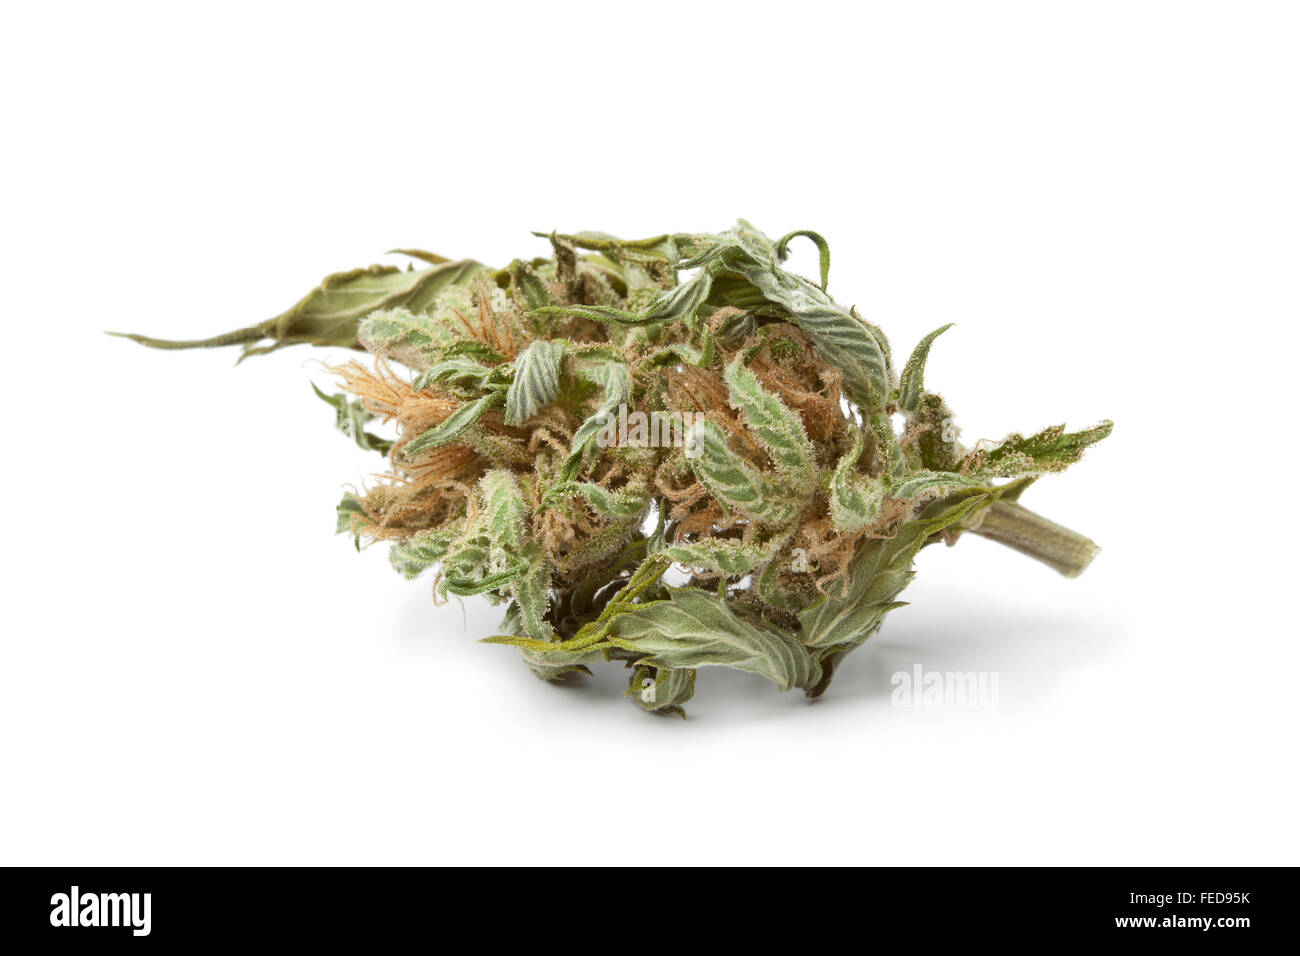 Dried marijuana bud with visible THC on white background Stock Photo